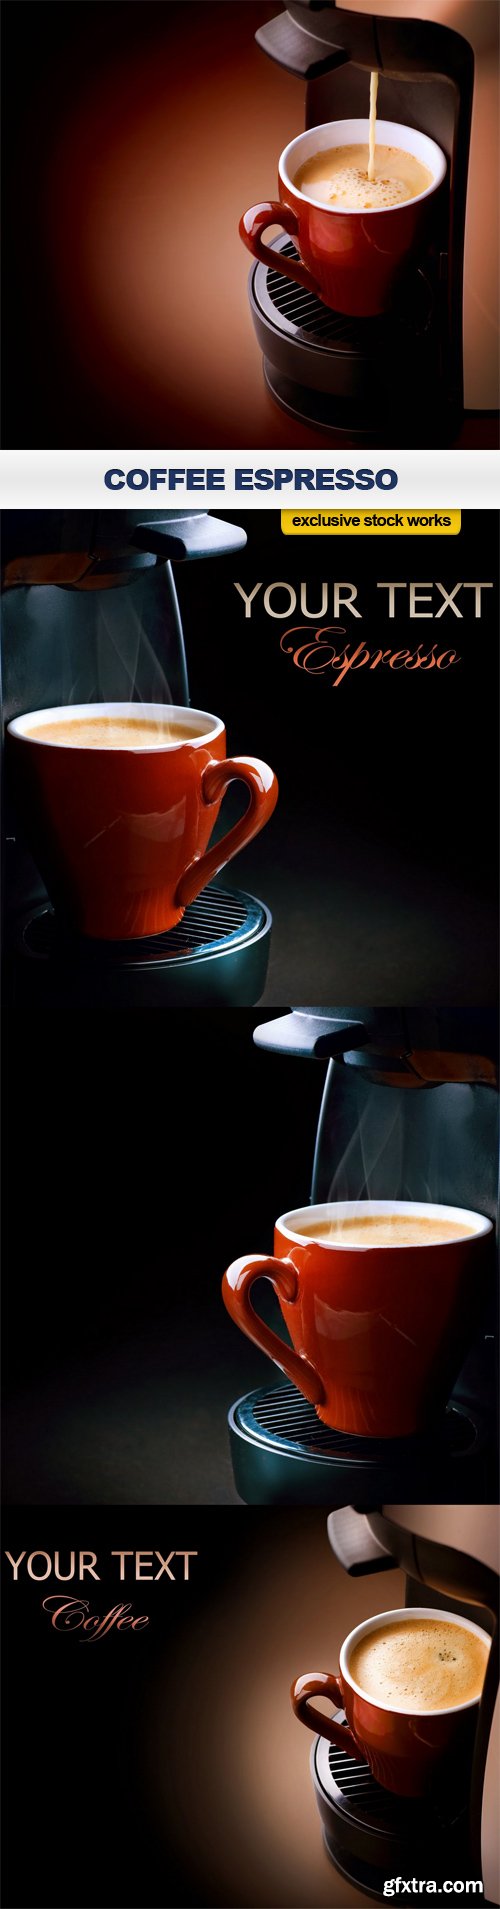 Coffee Espresso - 4 UHQ JPEG